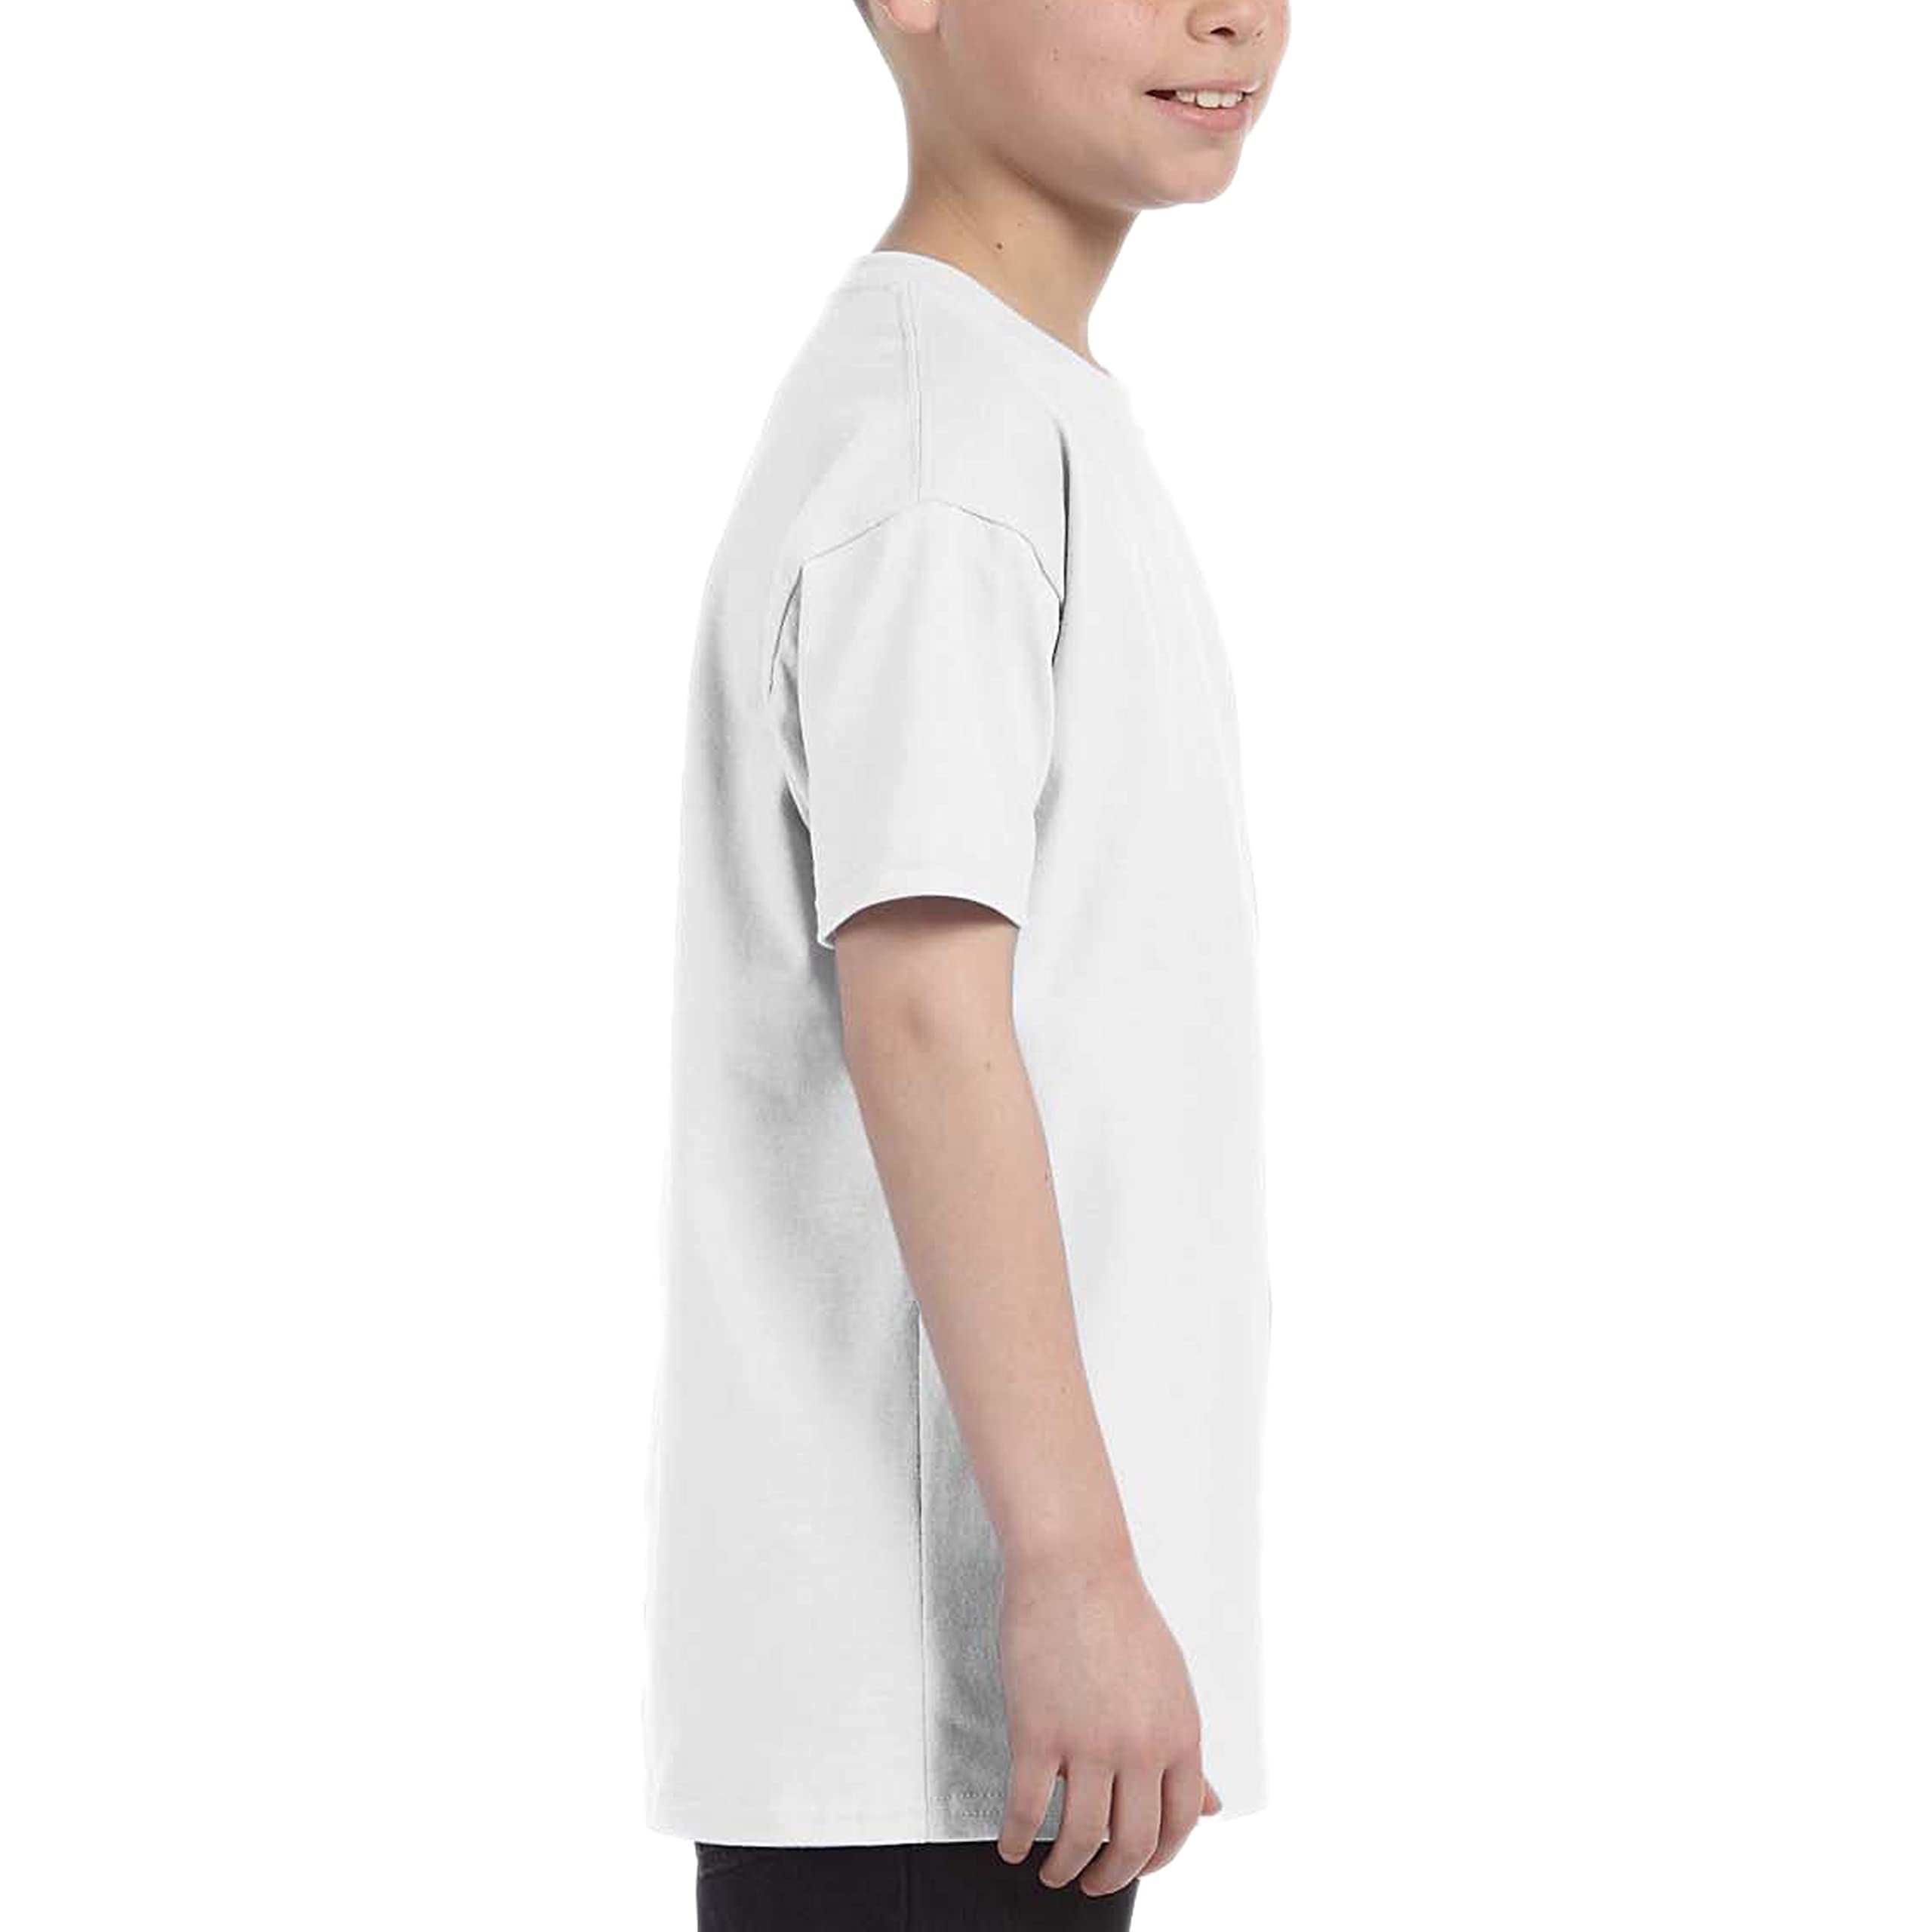 Gildan Boys Heavy Cotton 100% Cotton T-Shirt (Pack of 10)